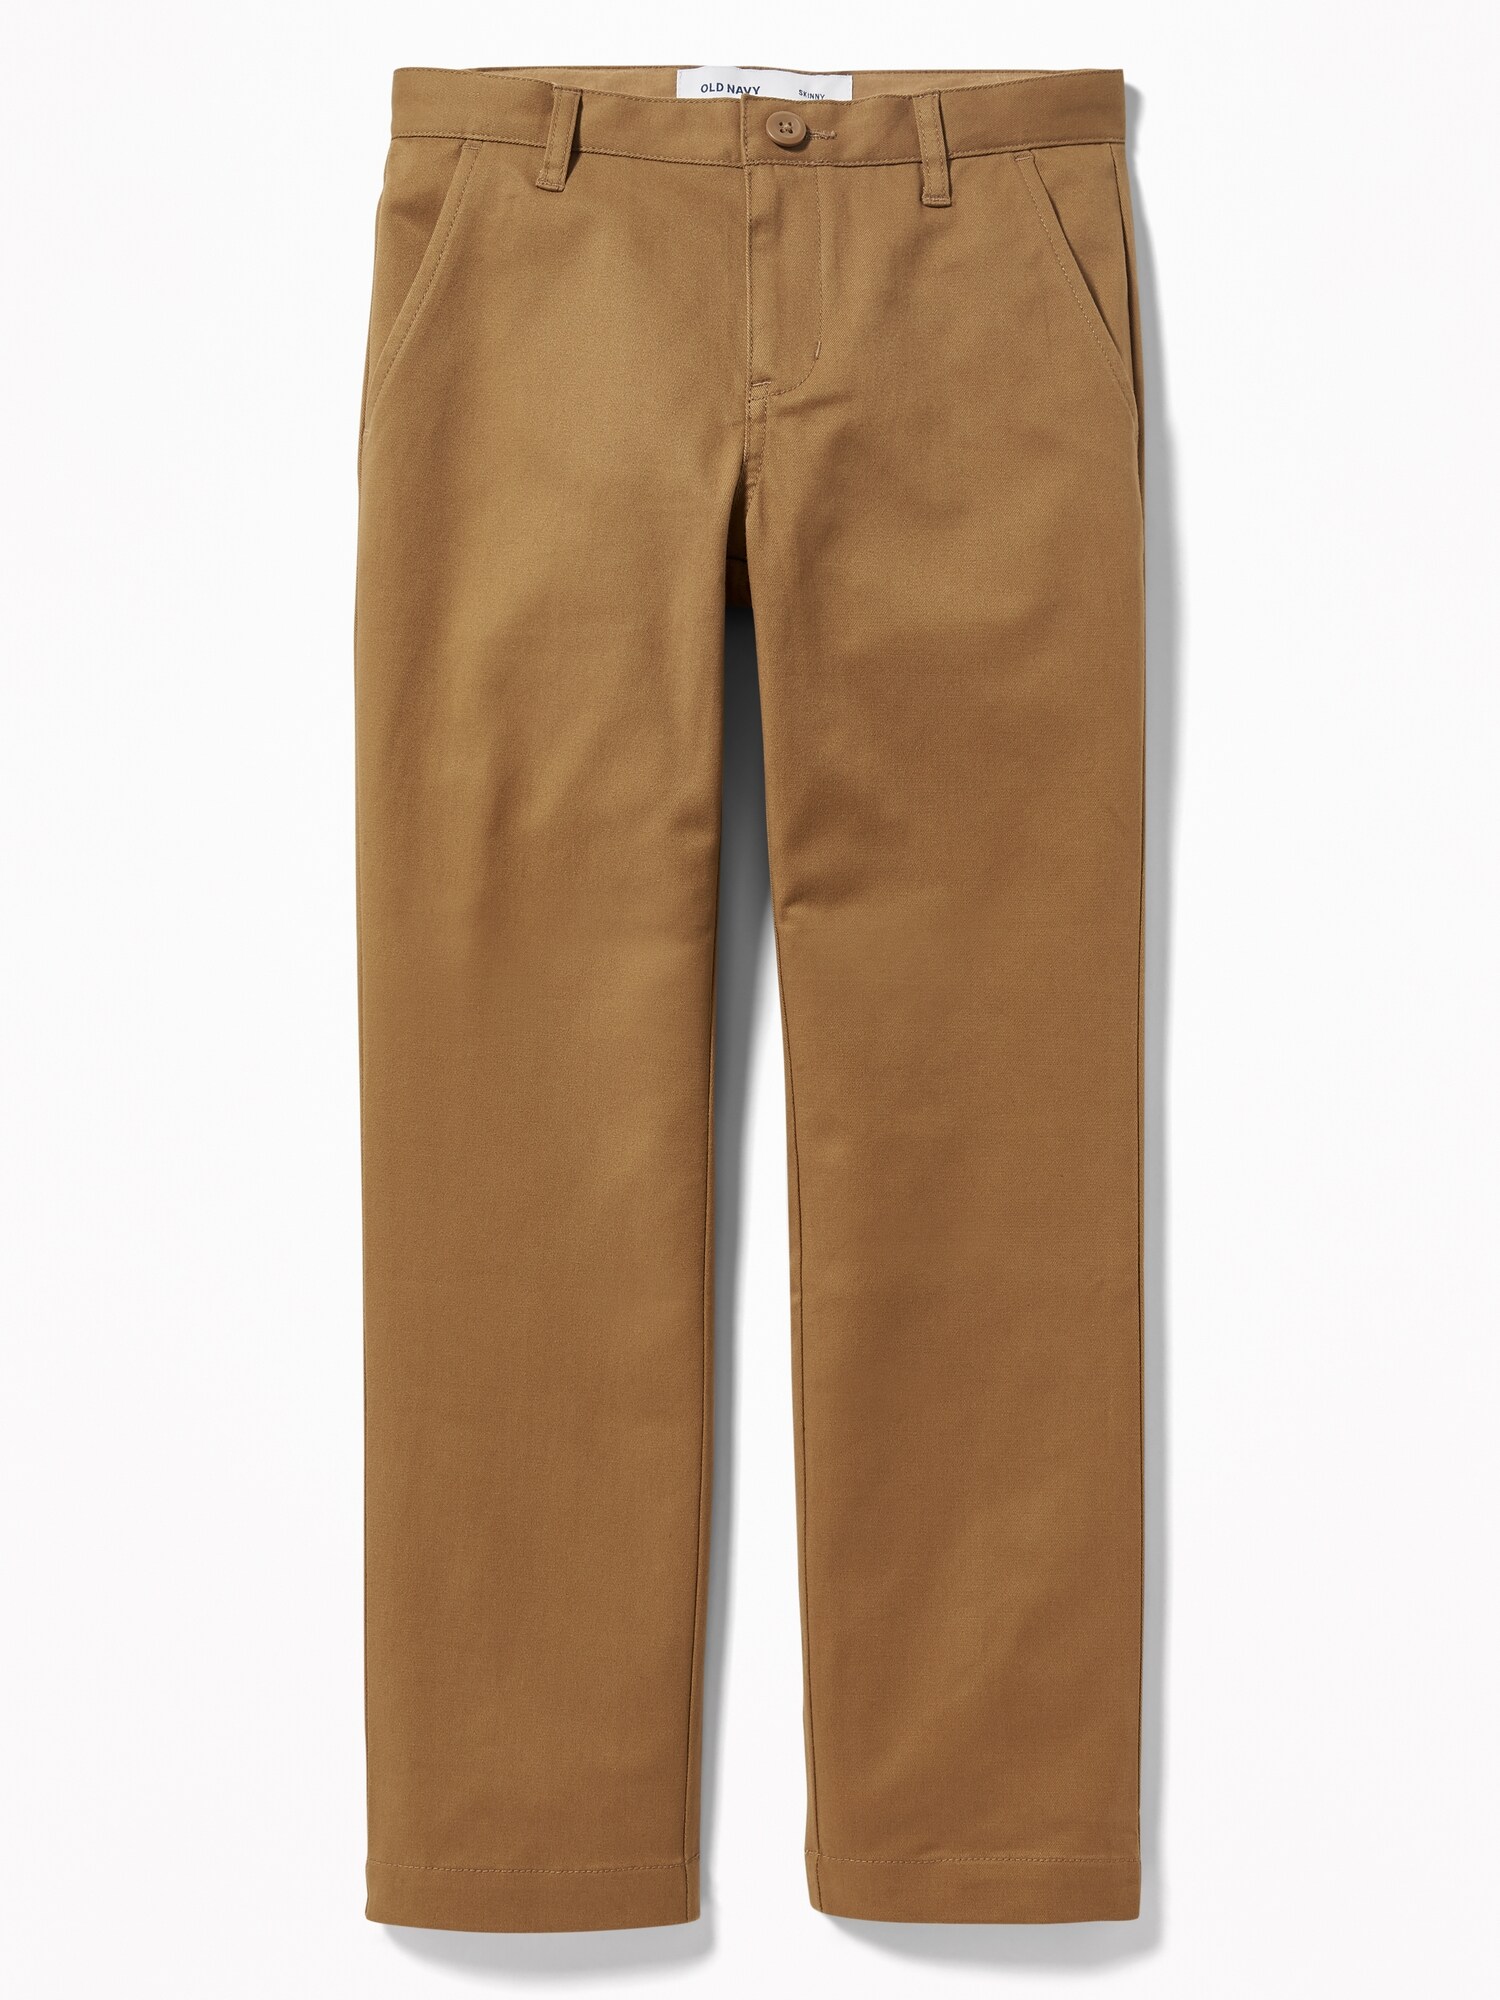 NEW Boys Size 18 Old Navy Khaki Pants Uniform Tan Beige Skinny Fit 2020 Line NWT 